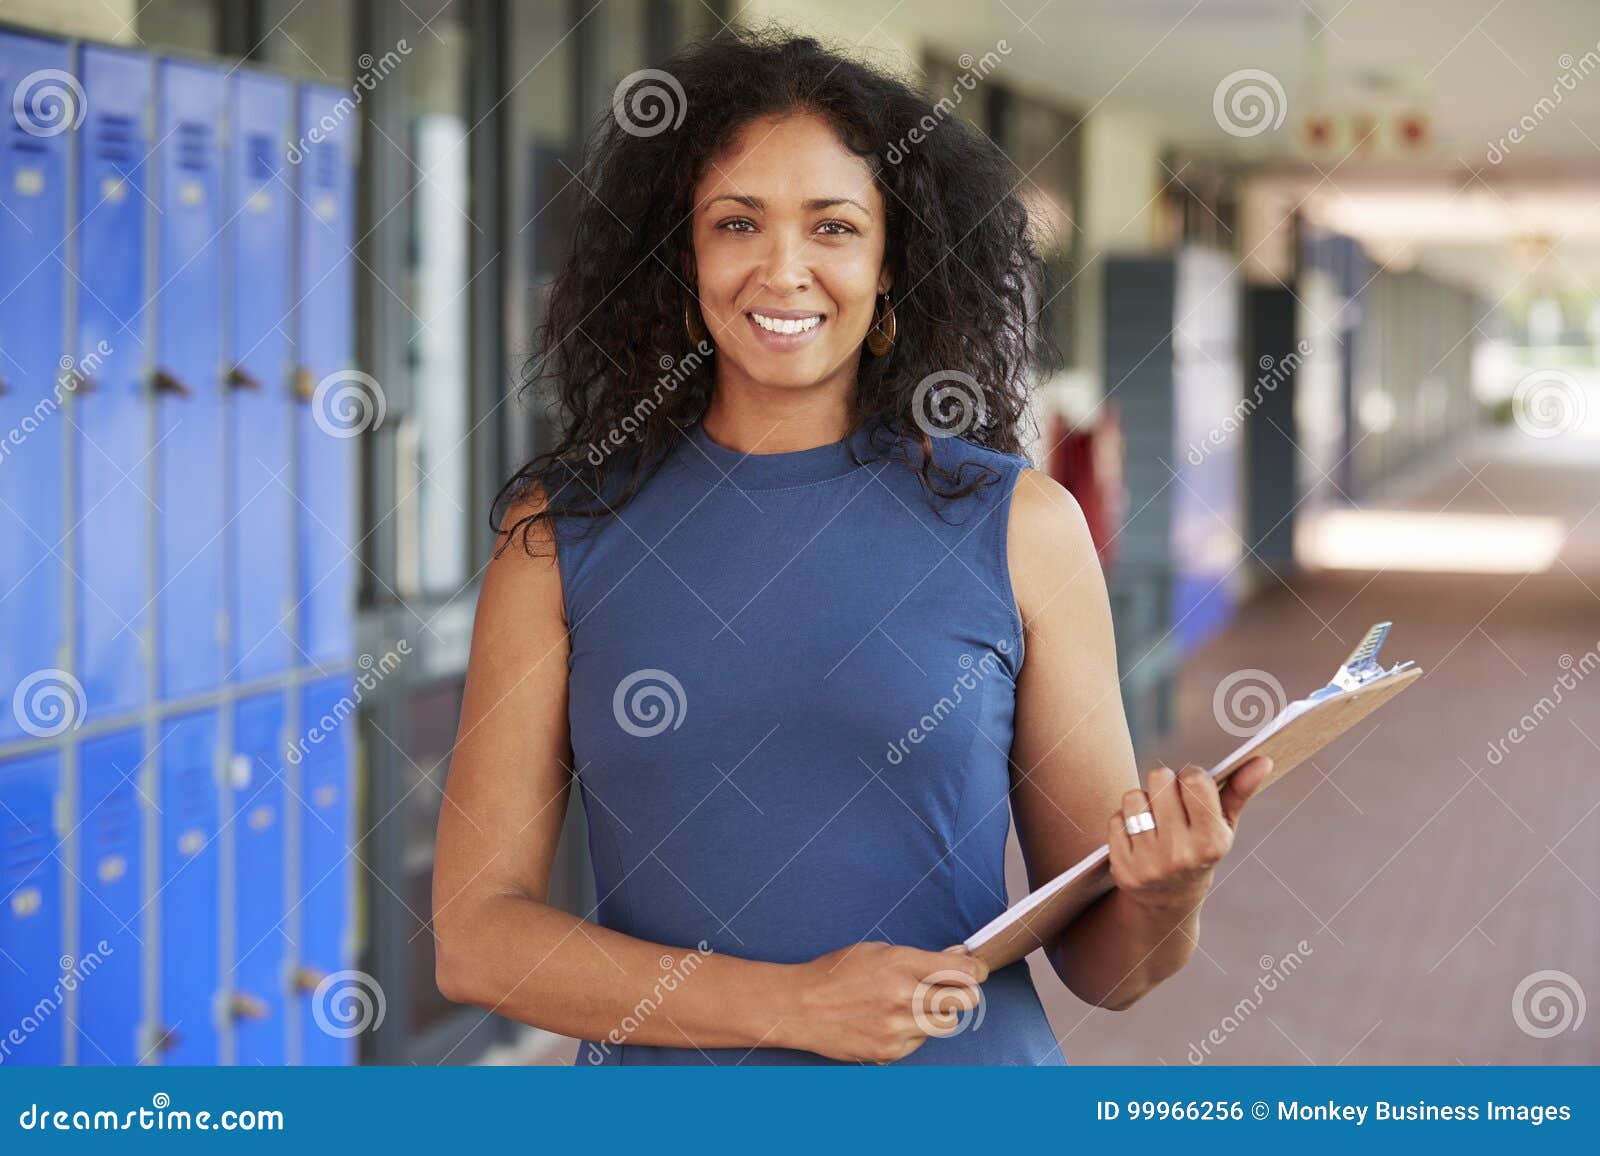 middle aged black female teacher smiling in school corridor